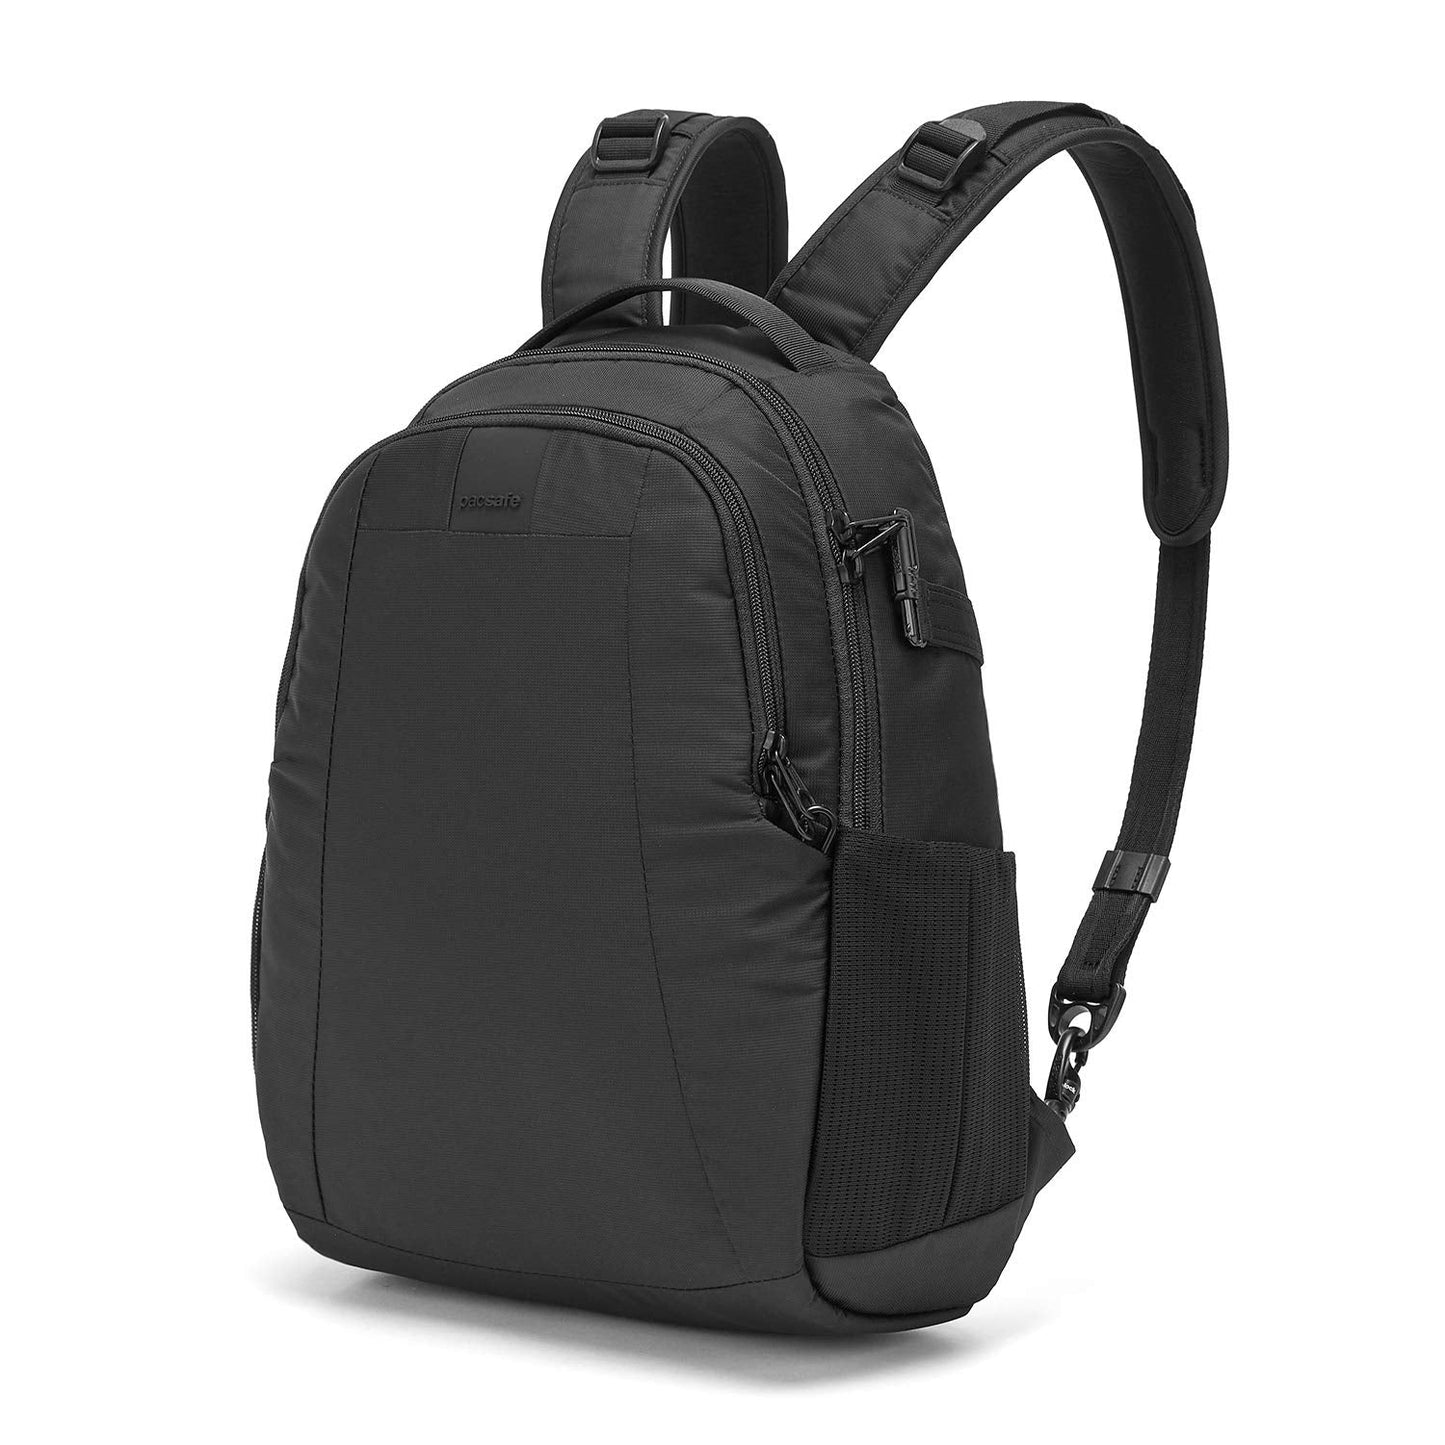 PacSafe Metrosafe LS350 anti-theft 15L backpack